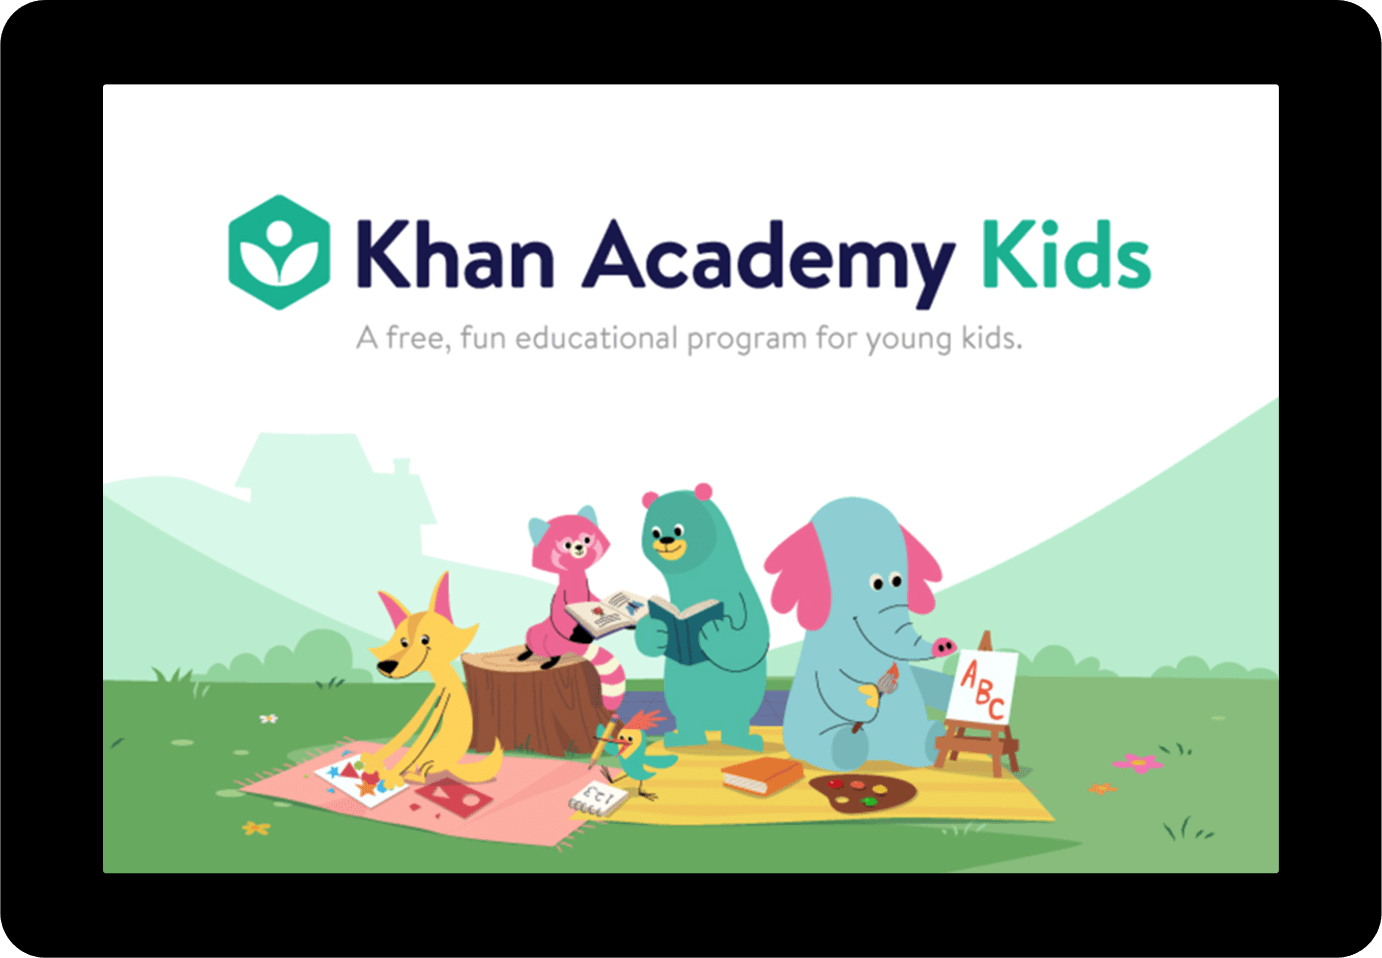 KHan Academy Kids iPad app